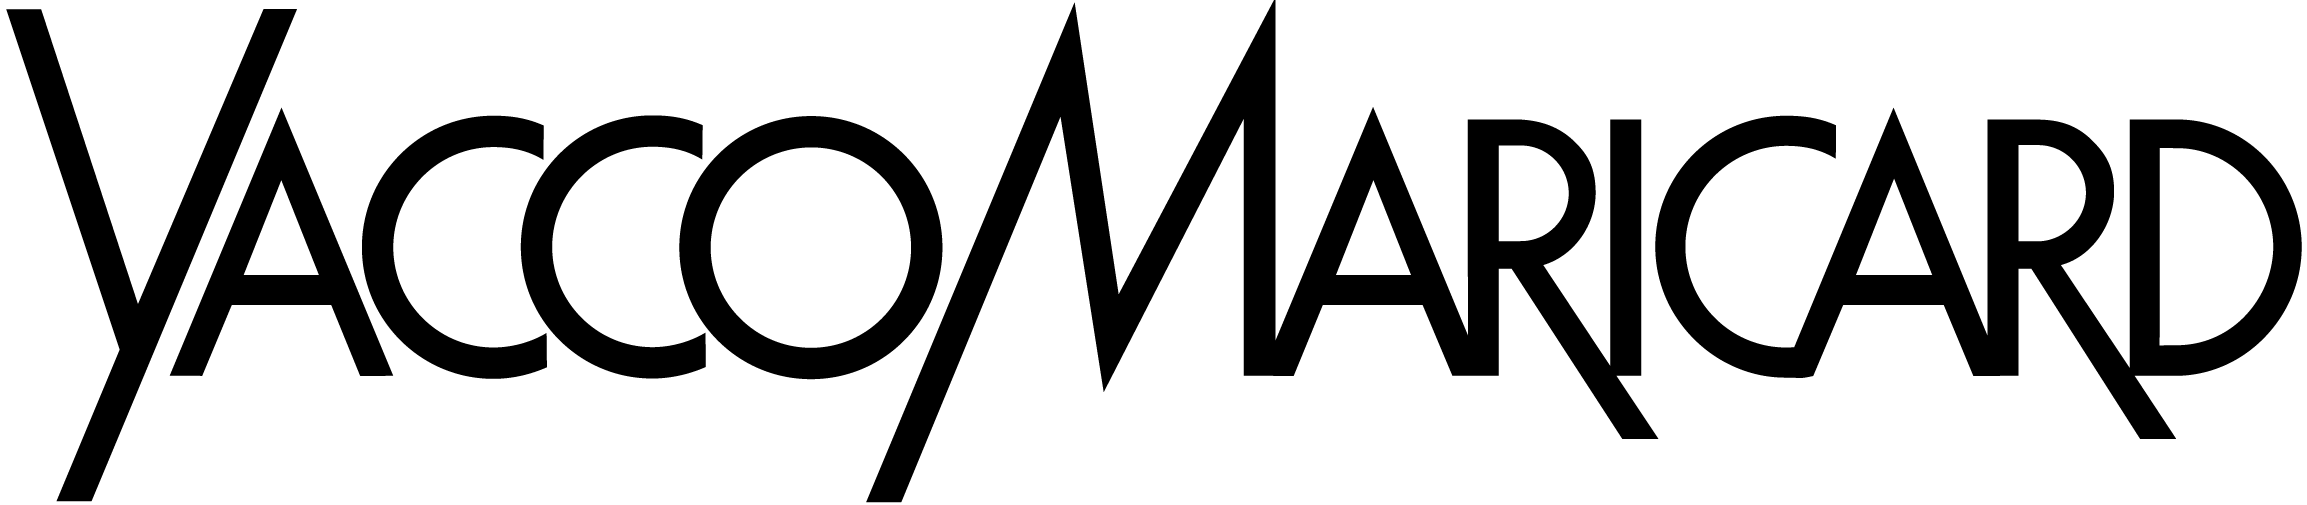 Yacco logo